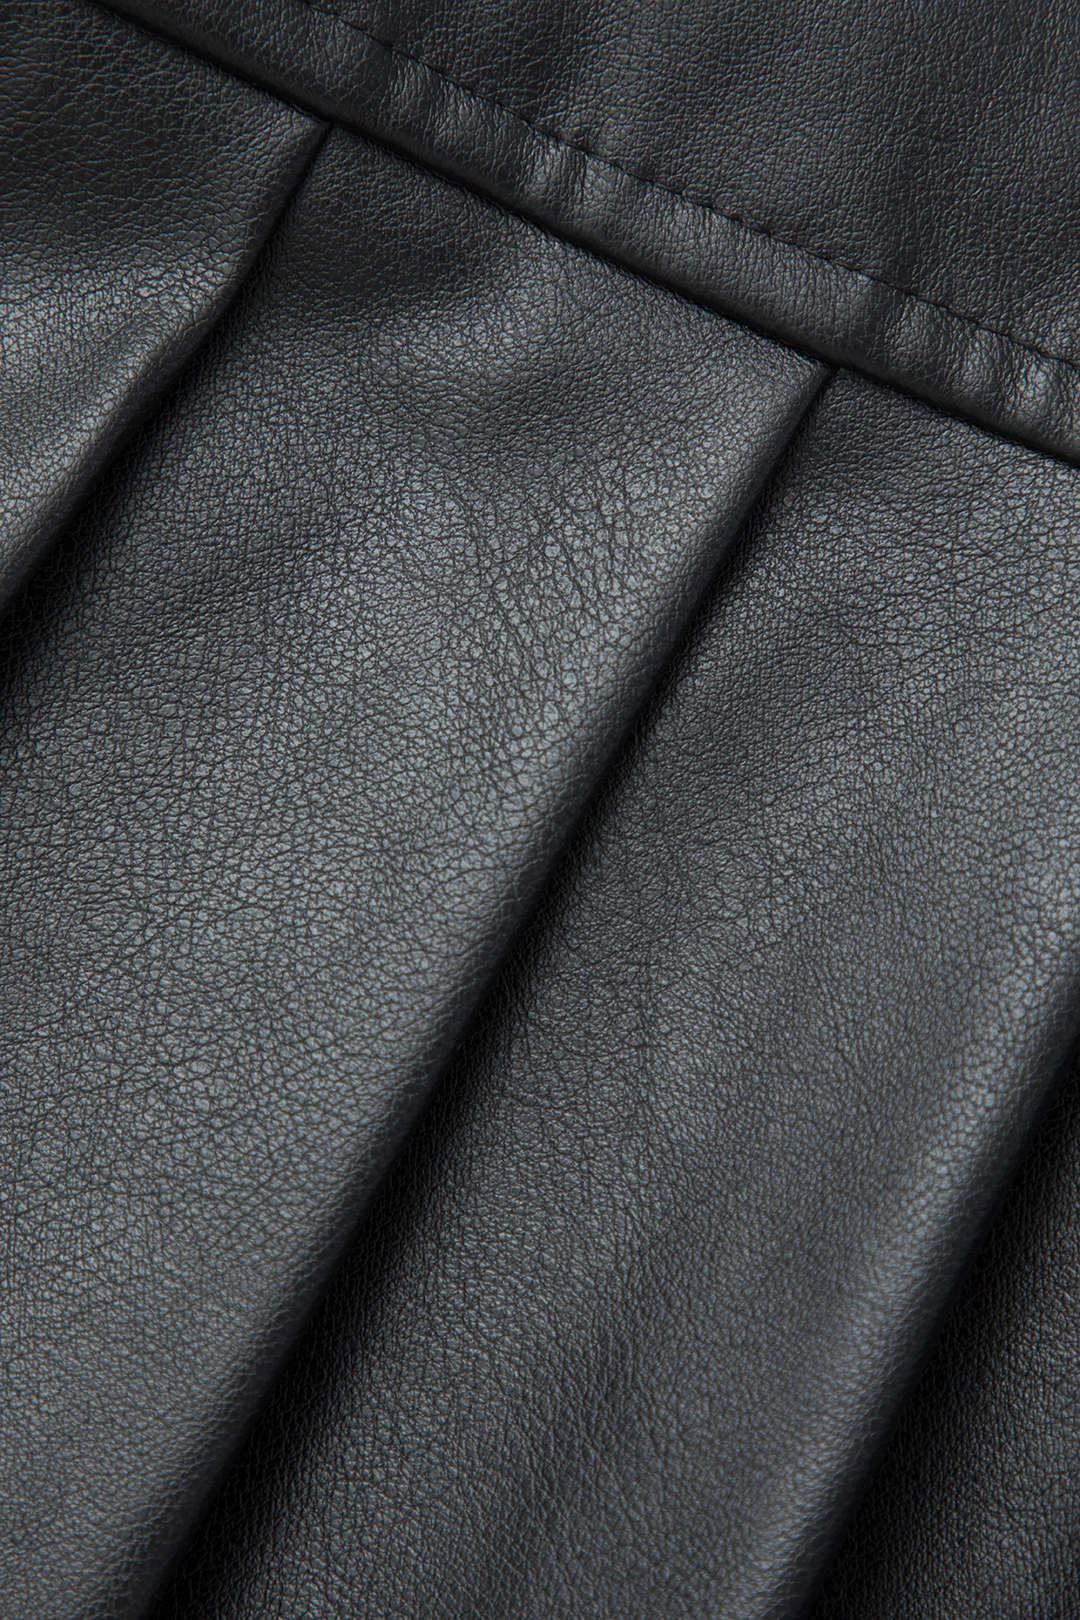 Faux Leather Zipper Pleated Mini Skirt